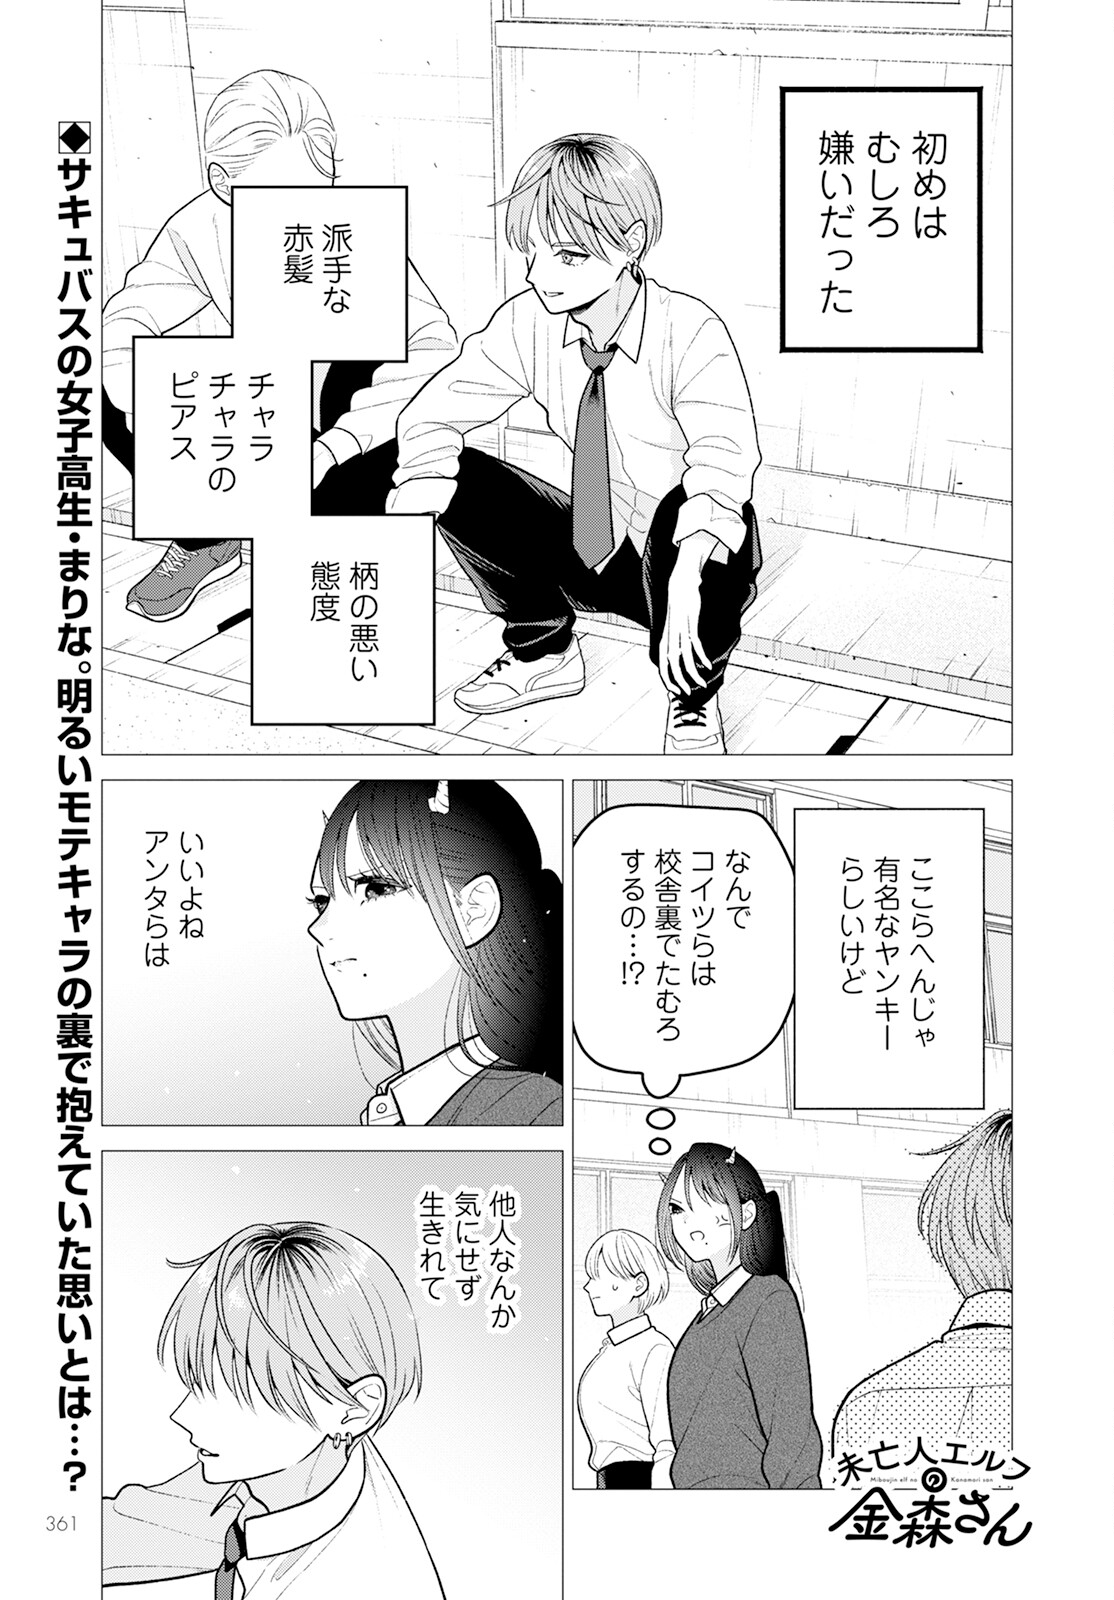 Miboujin Elf no Kanamori-san - Chapter 11 - Page 1